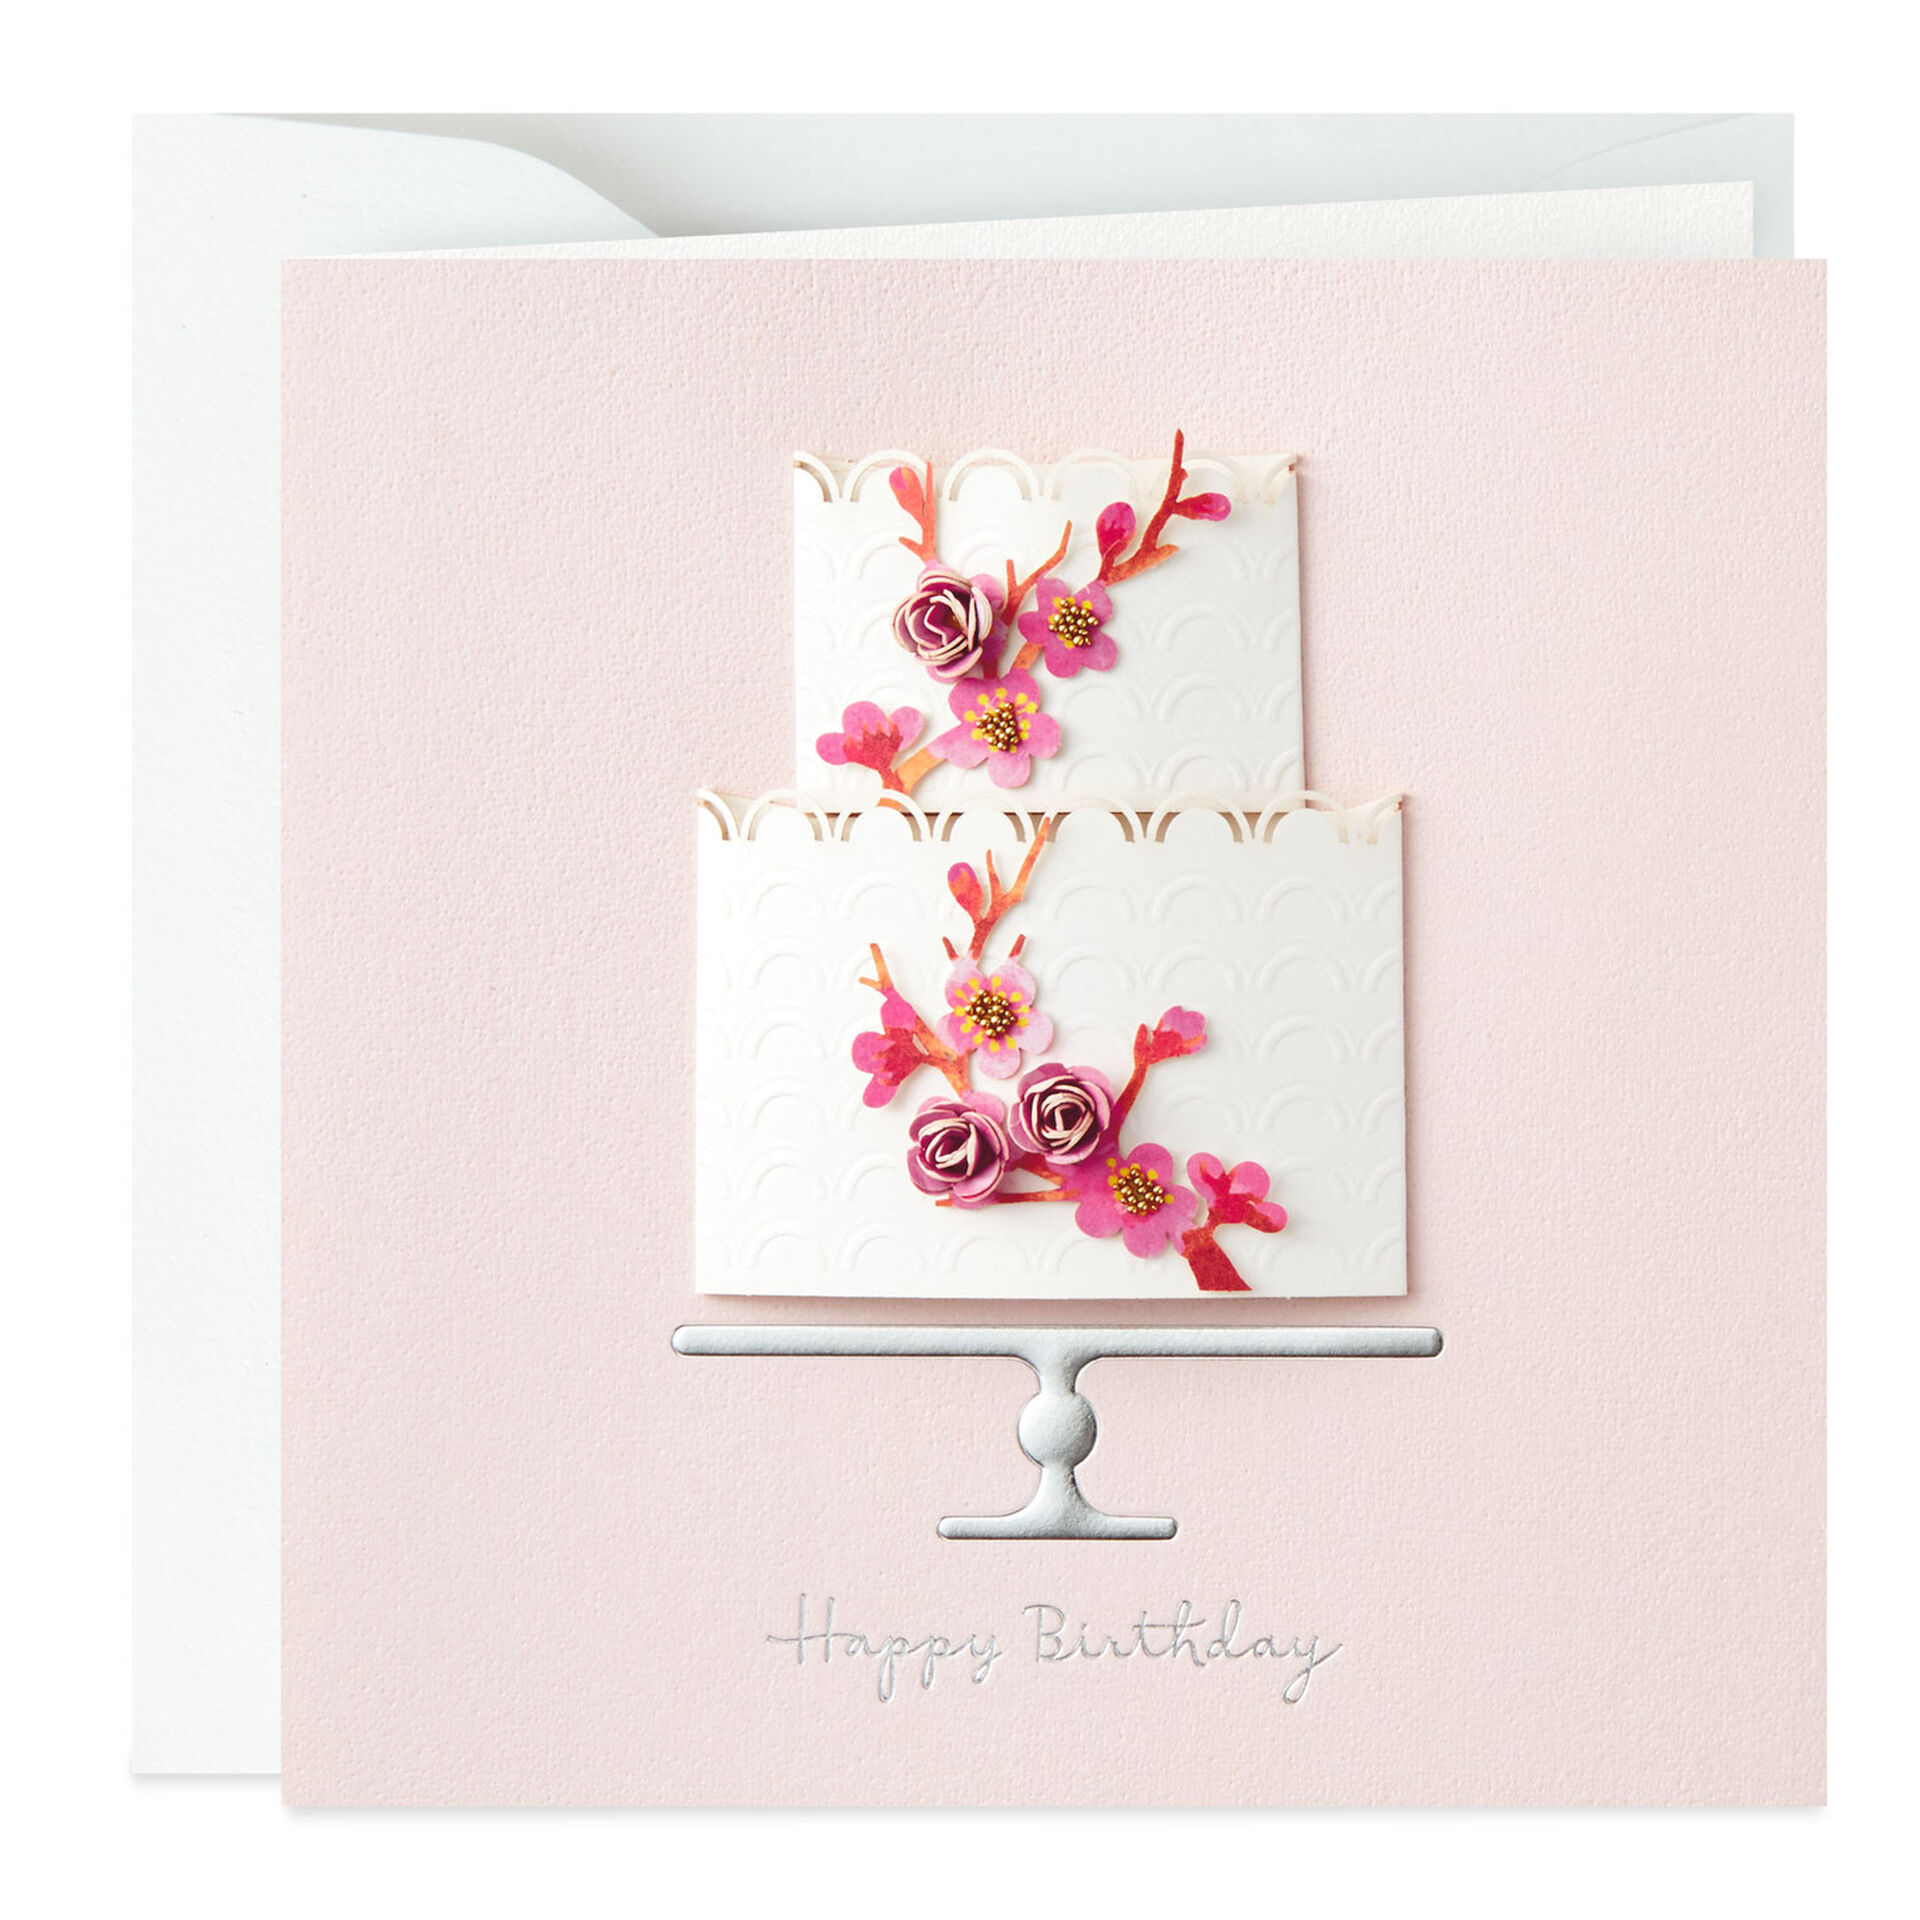 Cake-on-Stand-Celebrating-Birthday-Card_699LAD2345_01